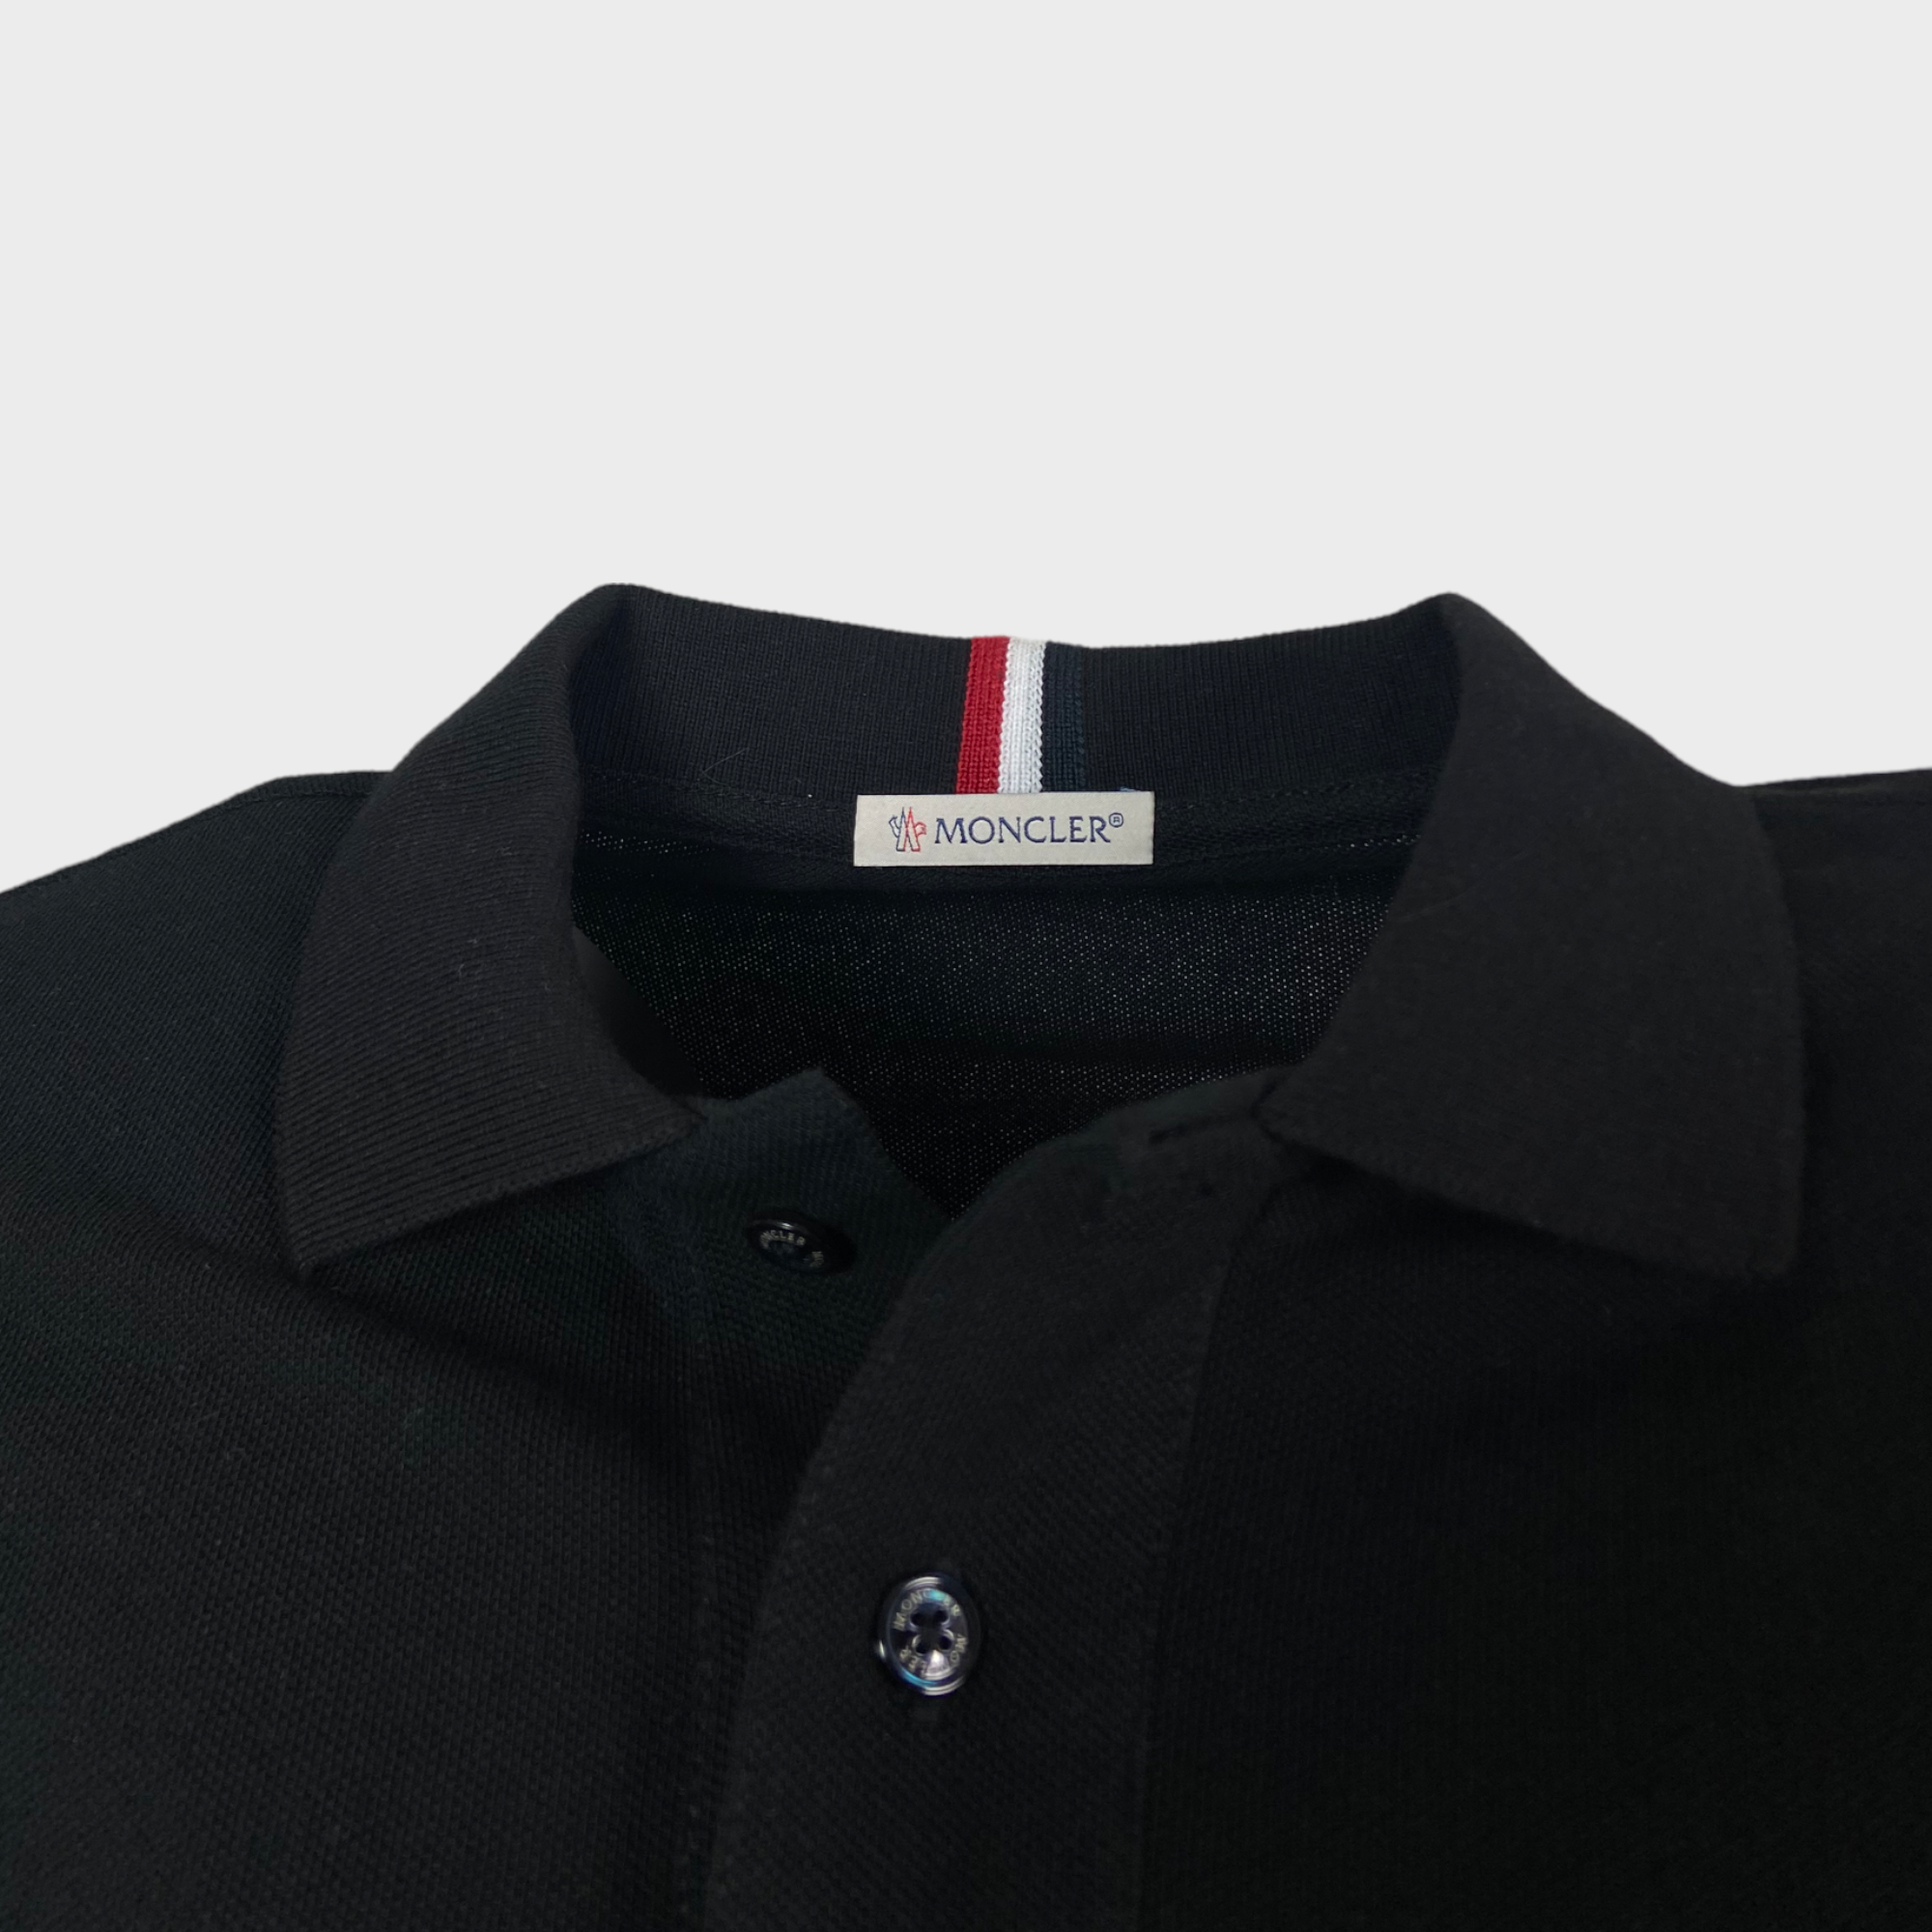 Moncler Polo Shirt - Size M (Fits S/M)